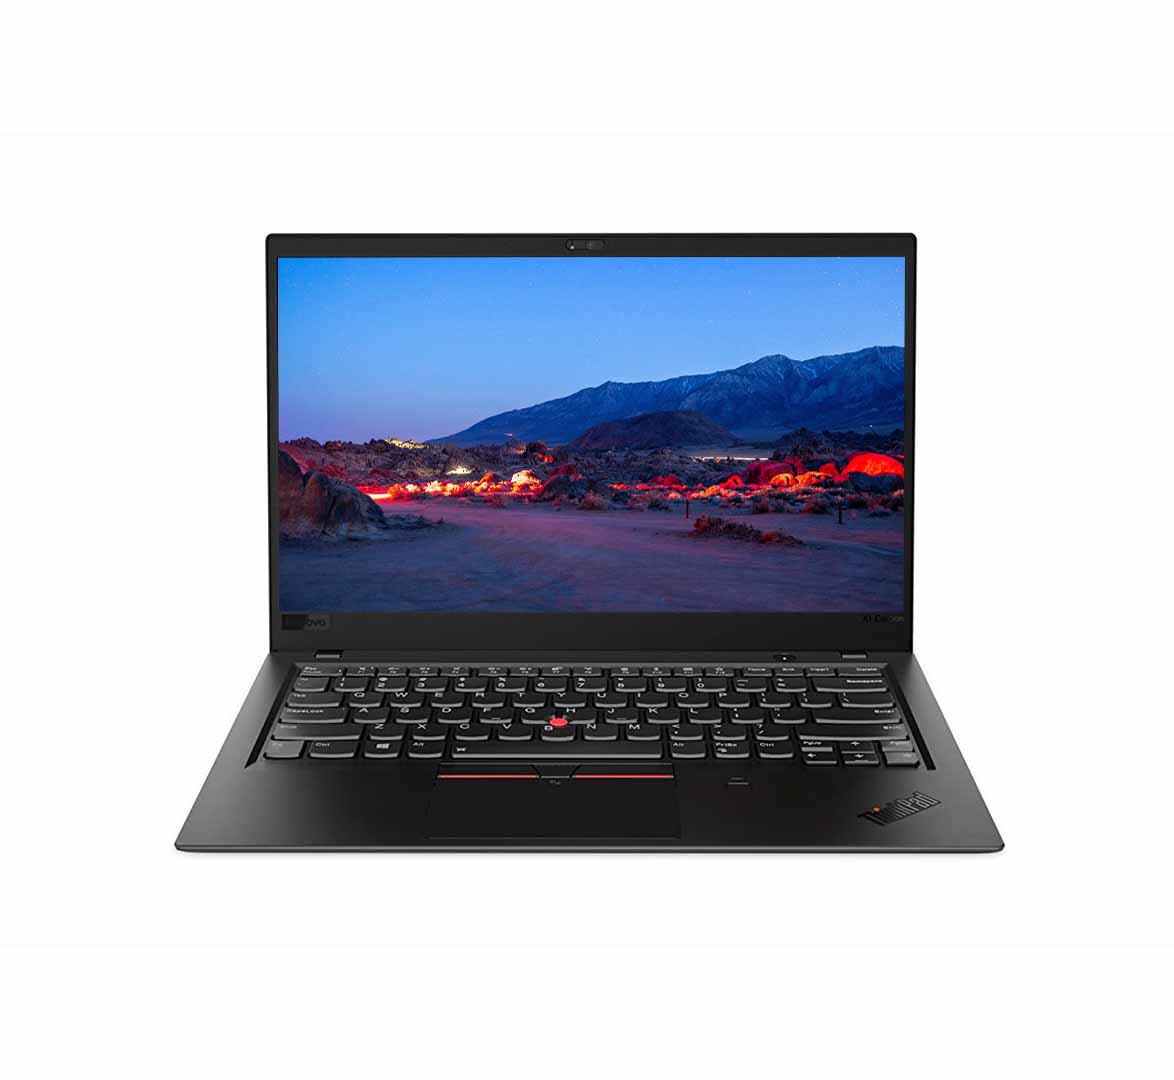 Lenovo ThinkPad X1 Carbon Business Laptop, Intel Core i5-5th Gen CPU, 8GB RAM, 256GB SSD, 14 inch Touchscreen, Windows 10